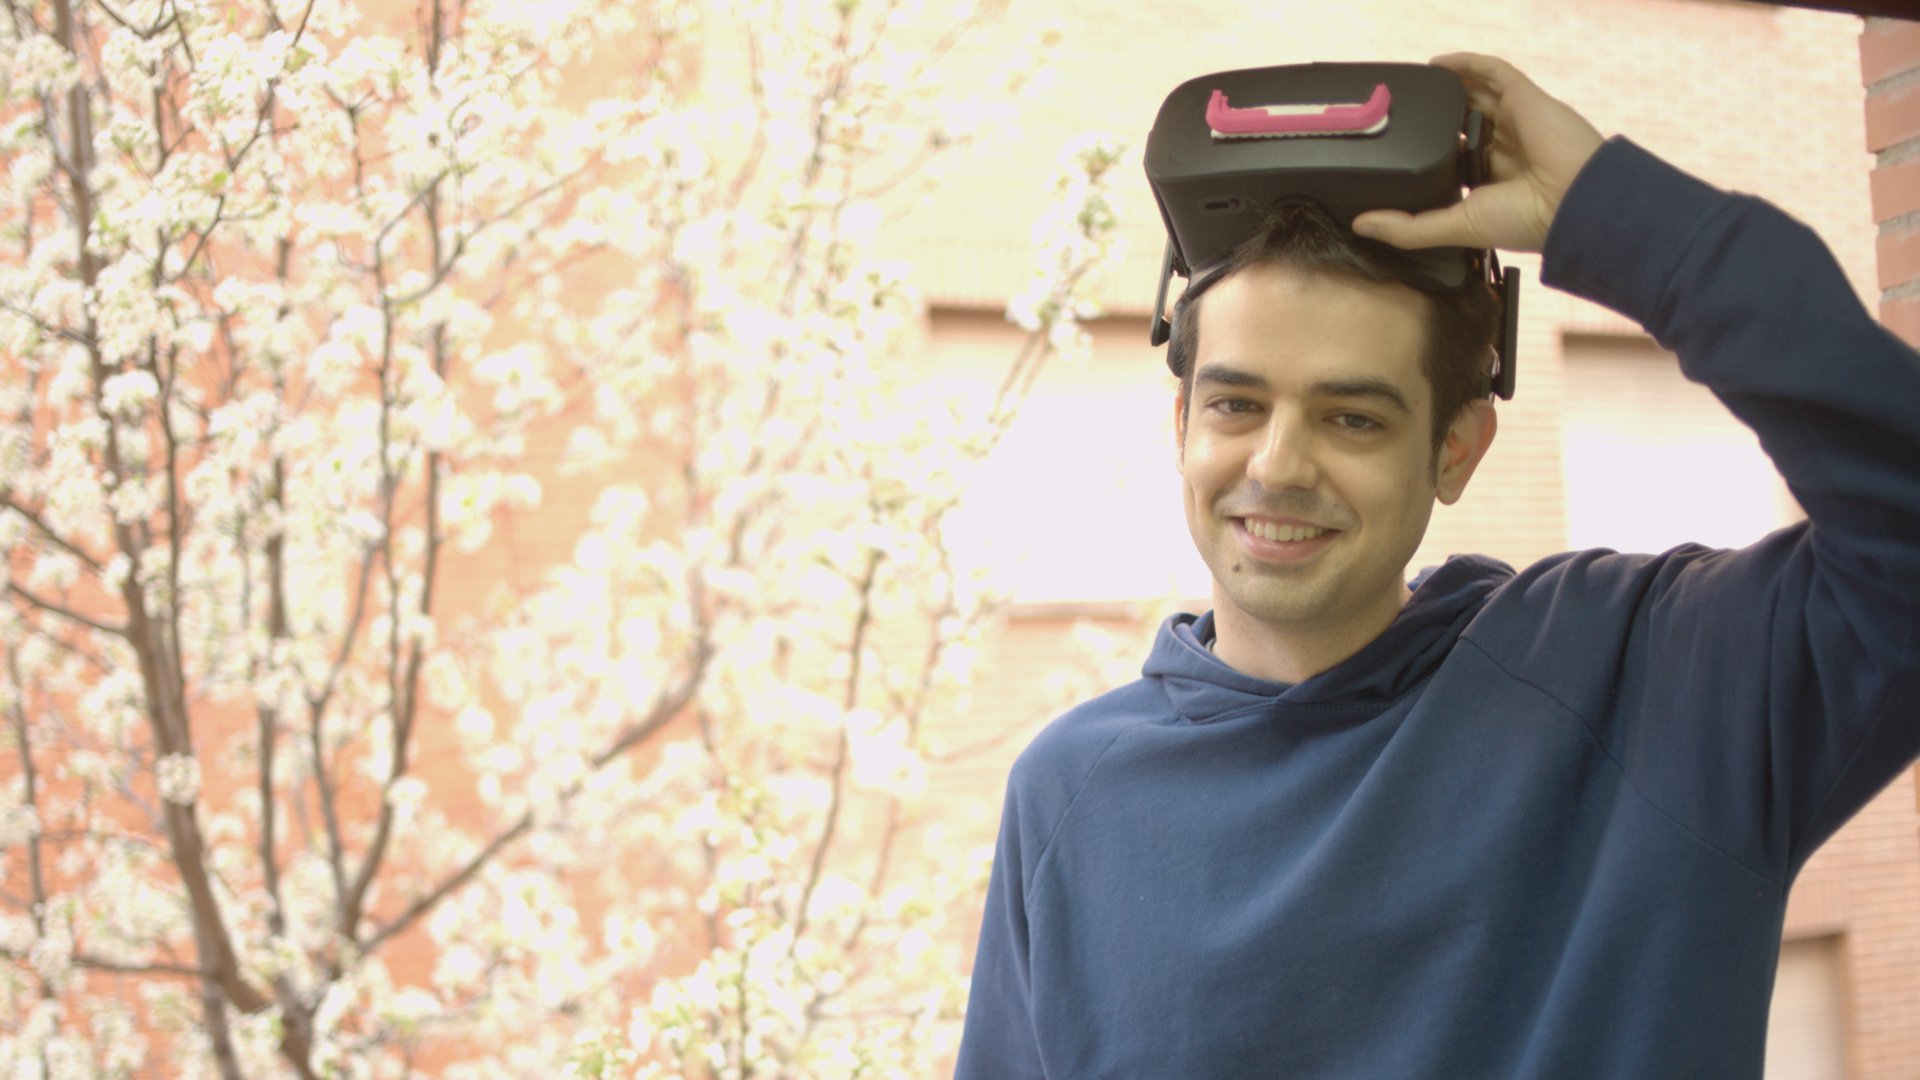 Juanfran smiling at camera with virtual reality glasses